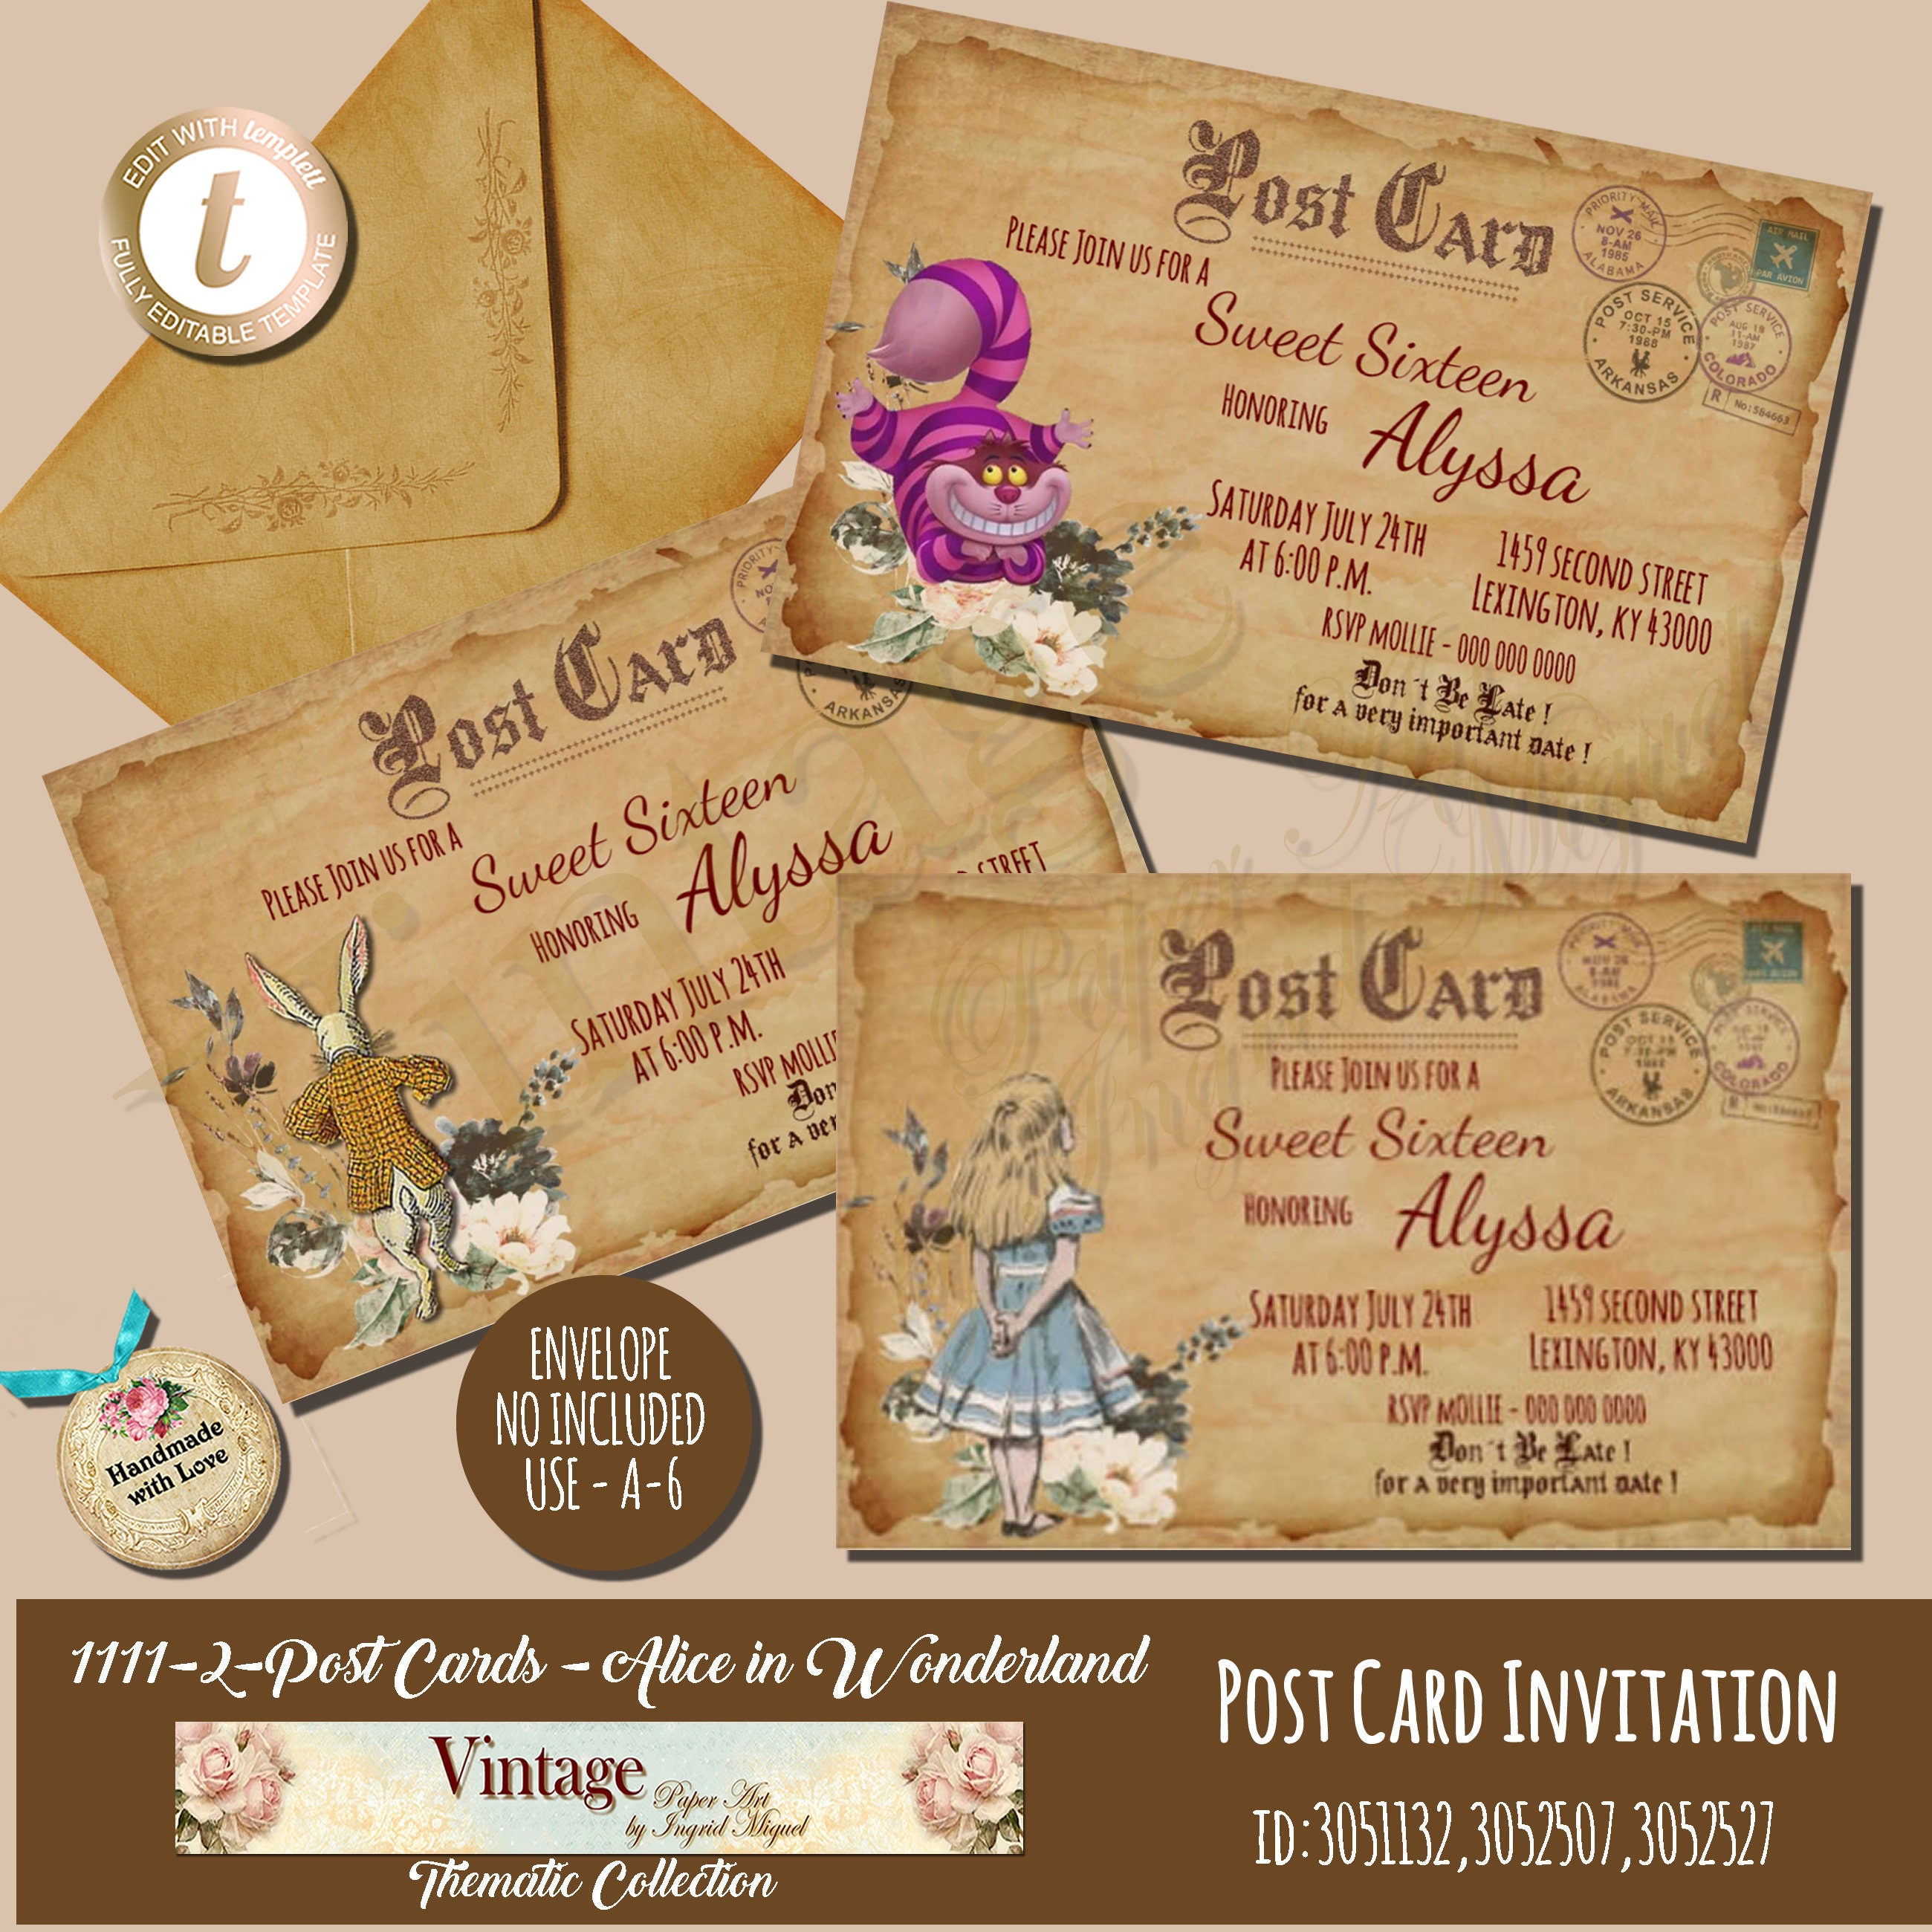 Alice in Wonderland Sweet 16 Invitations/sweet 16 Invites